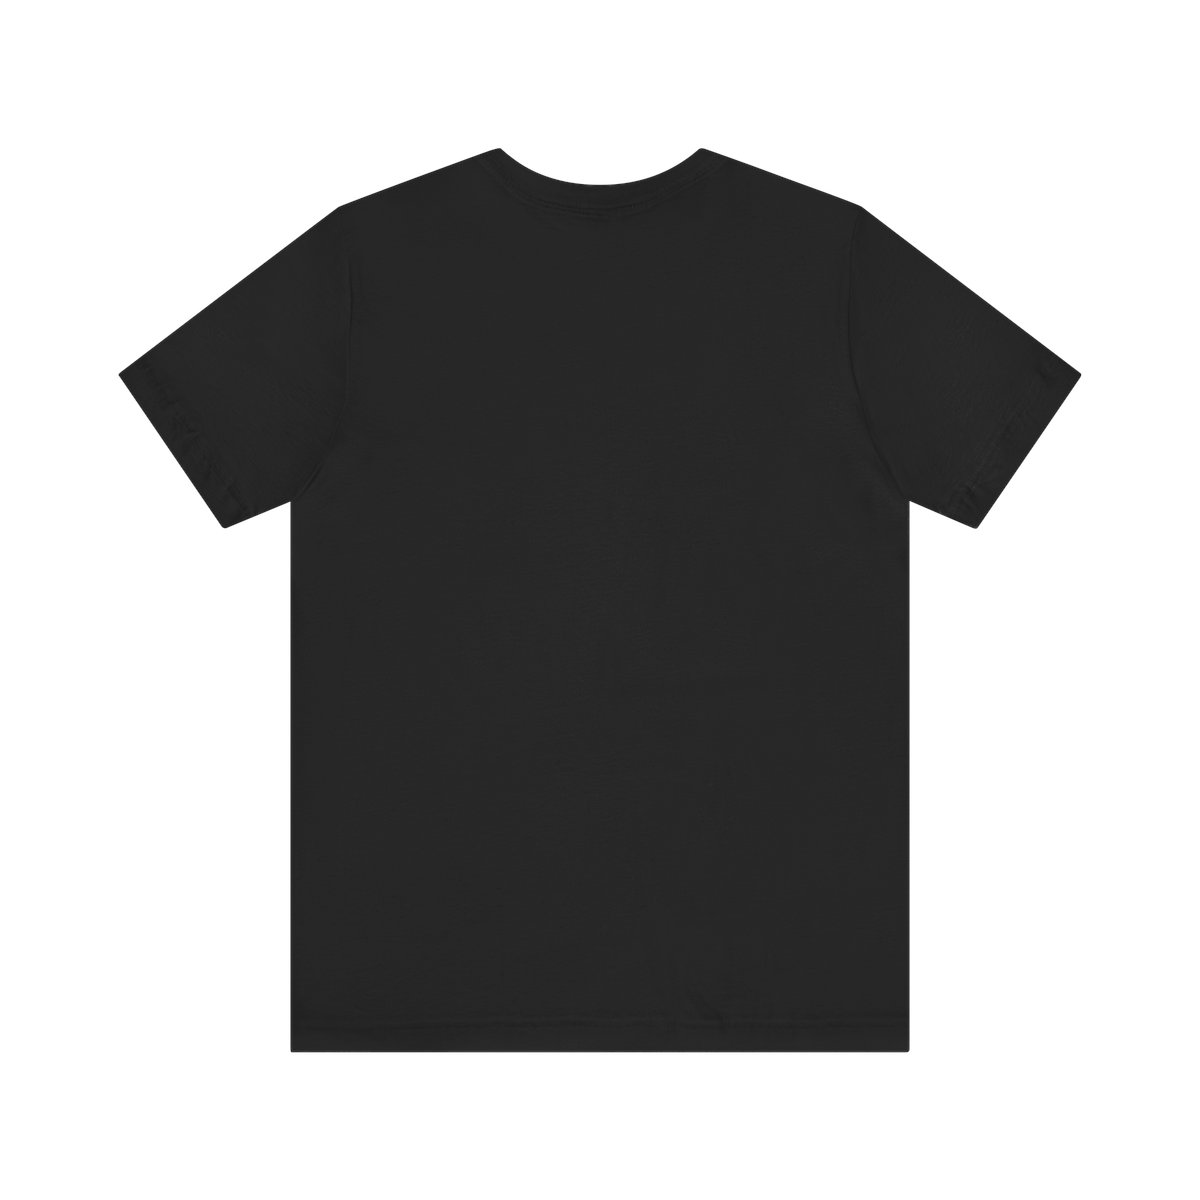 Being TONY BOURDAIN - Anthony Bourdain - T-Shirt product thumbnail image